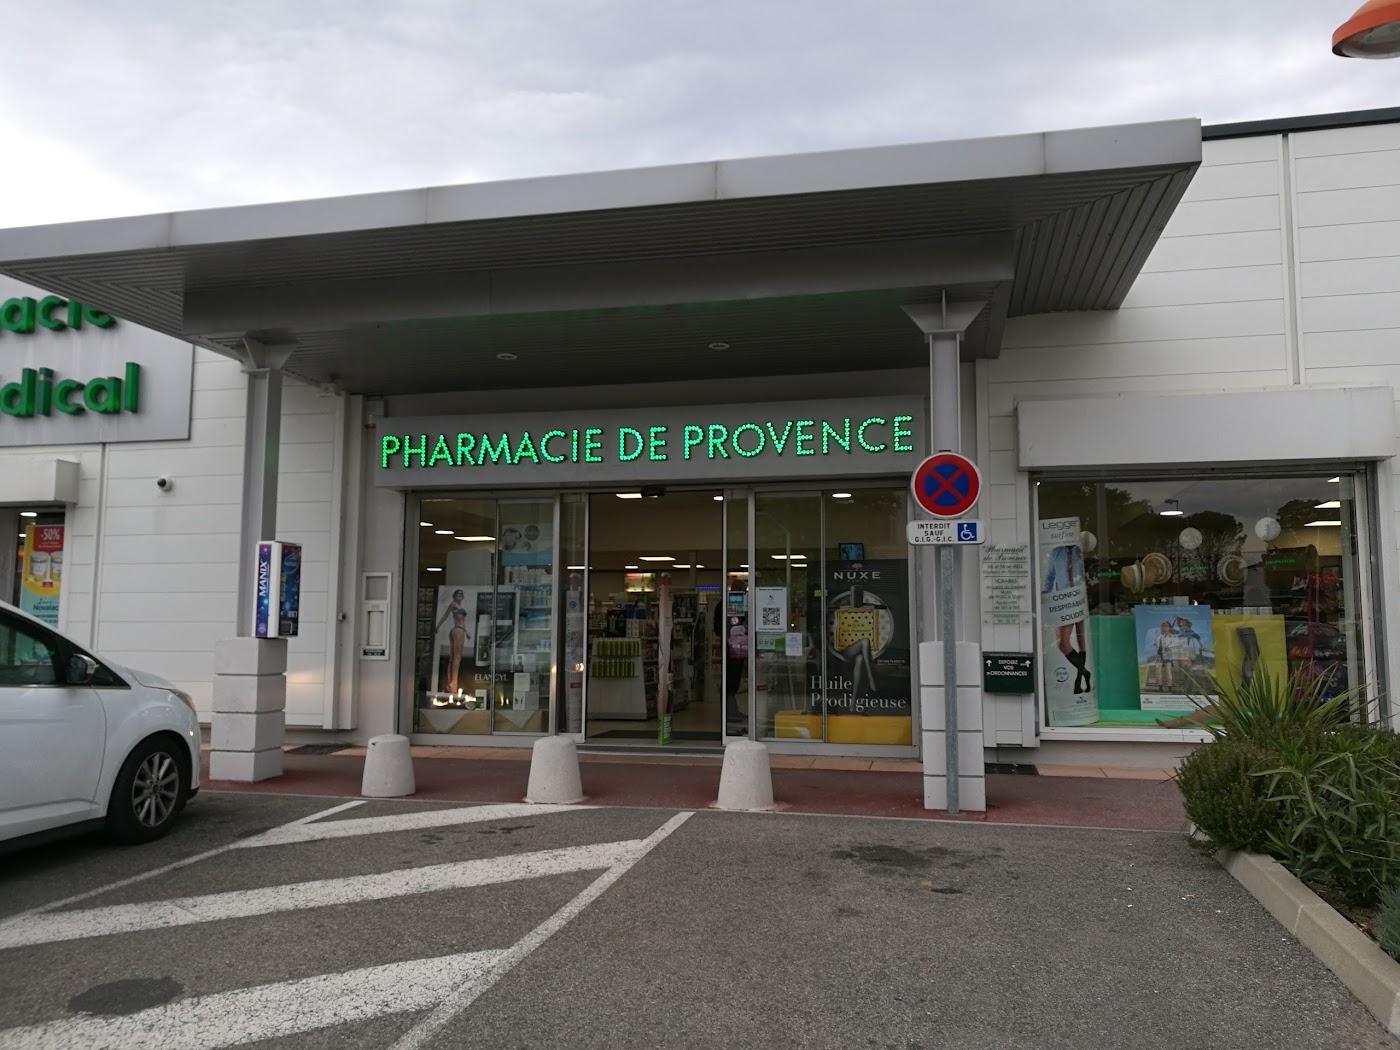 Pharmacie de Provence